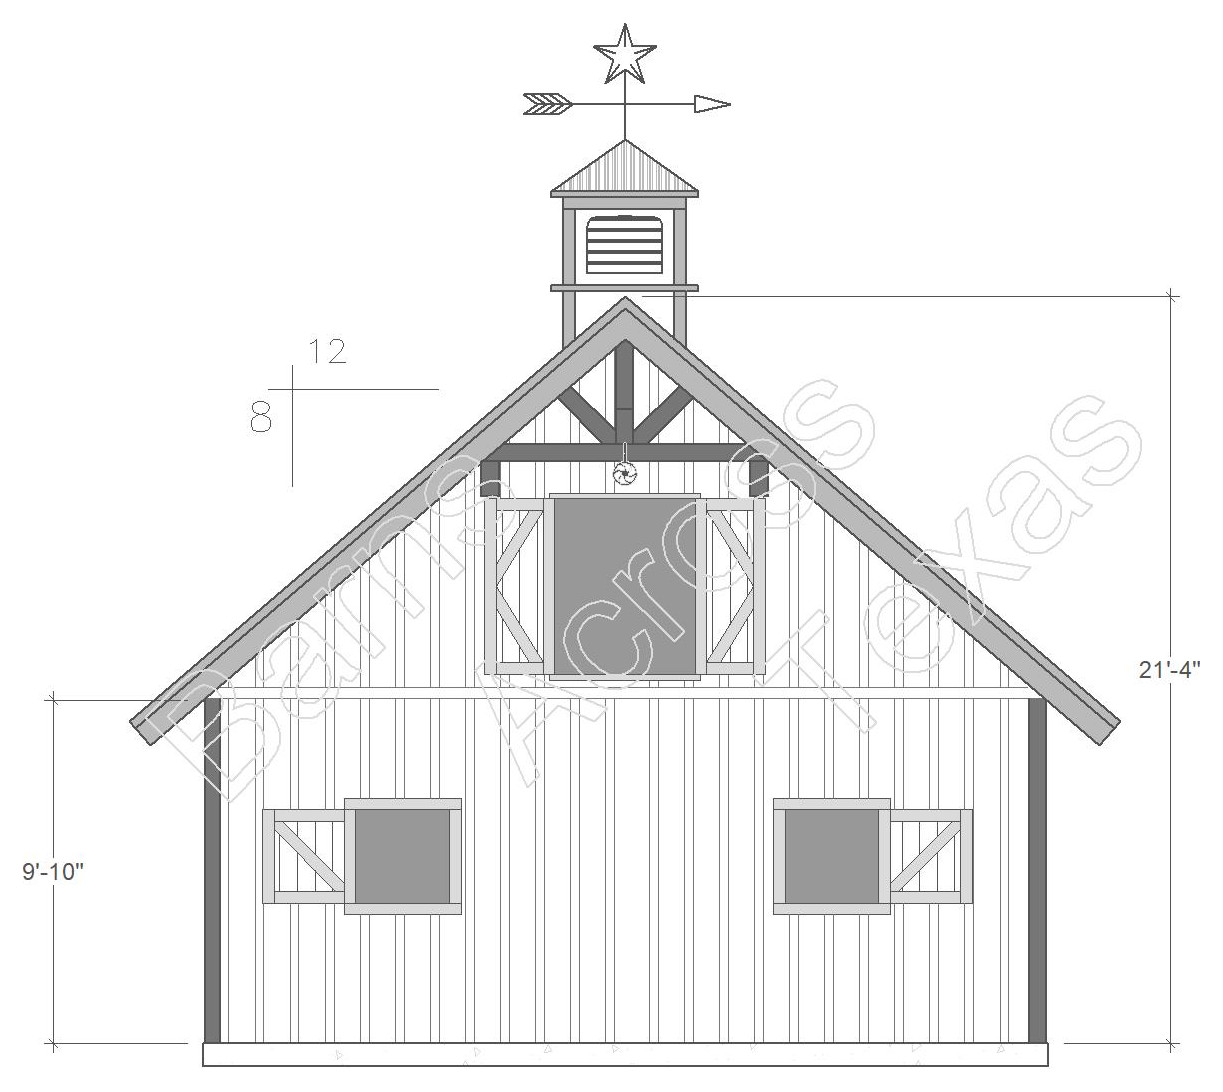 2 Stall Horse Barn w/ Loft